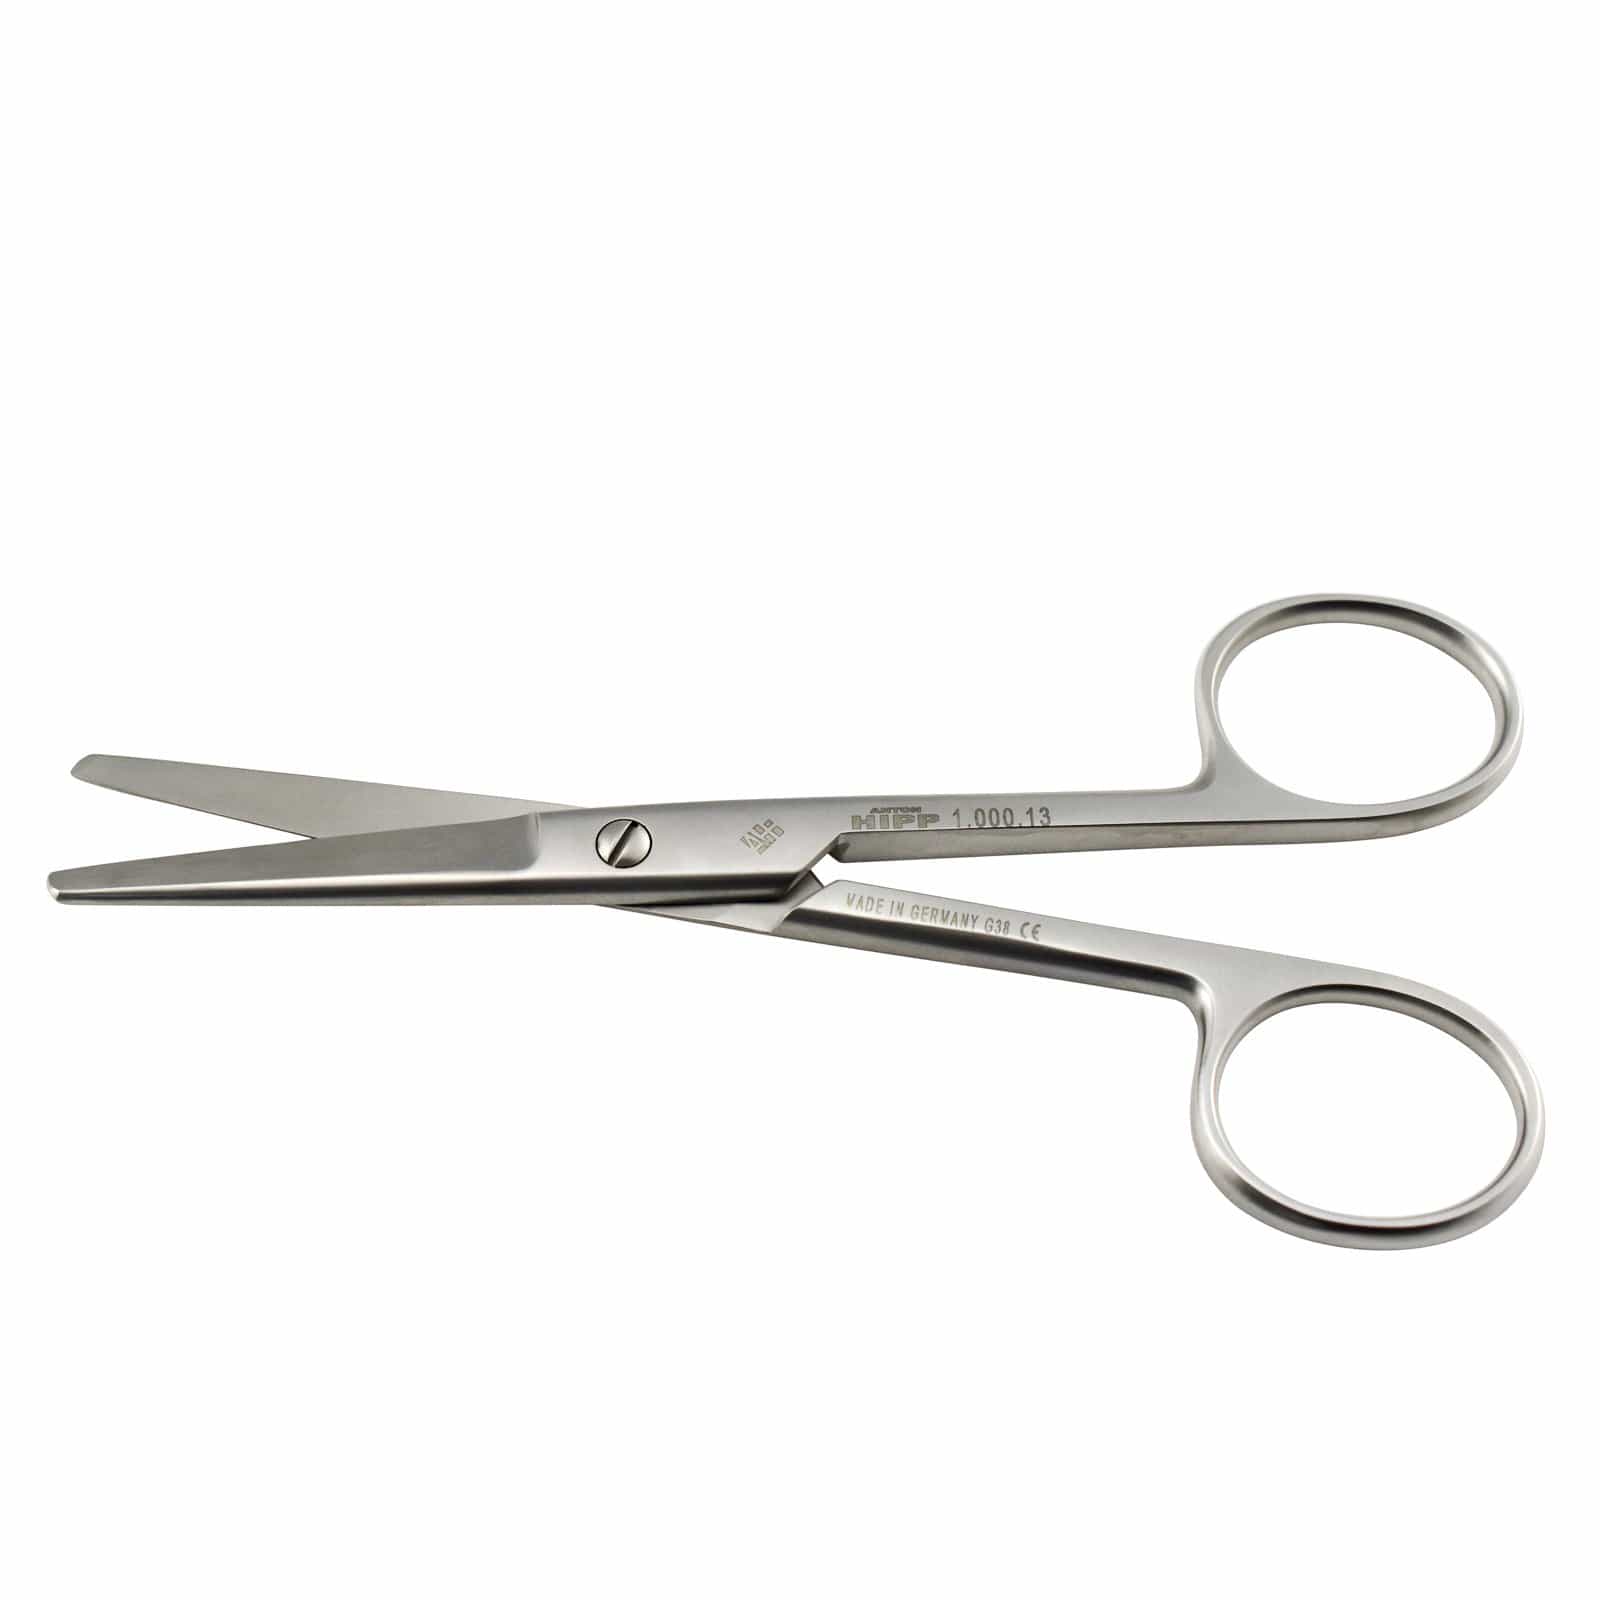 Hipp Surgical Instruments 13cm / Straight / Blunt/Blunt Hipp Surgical Scissors